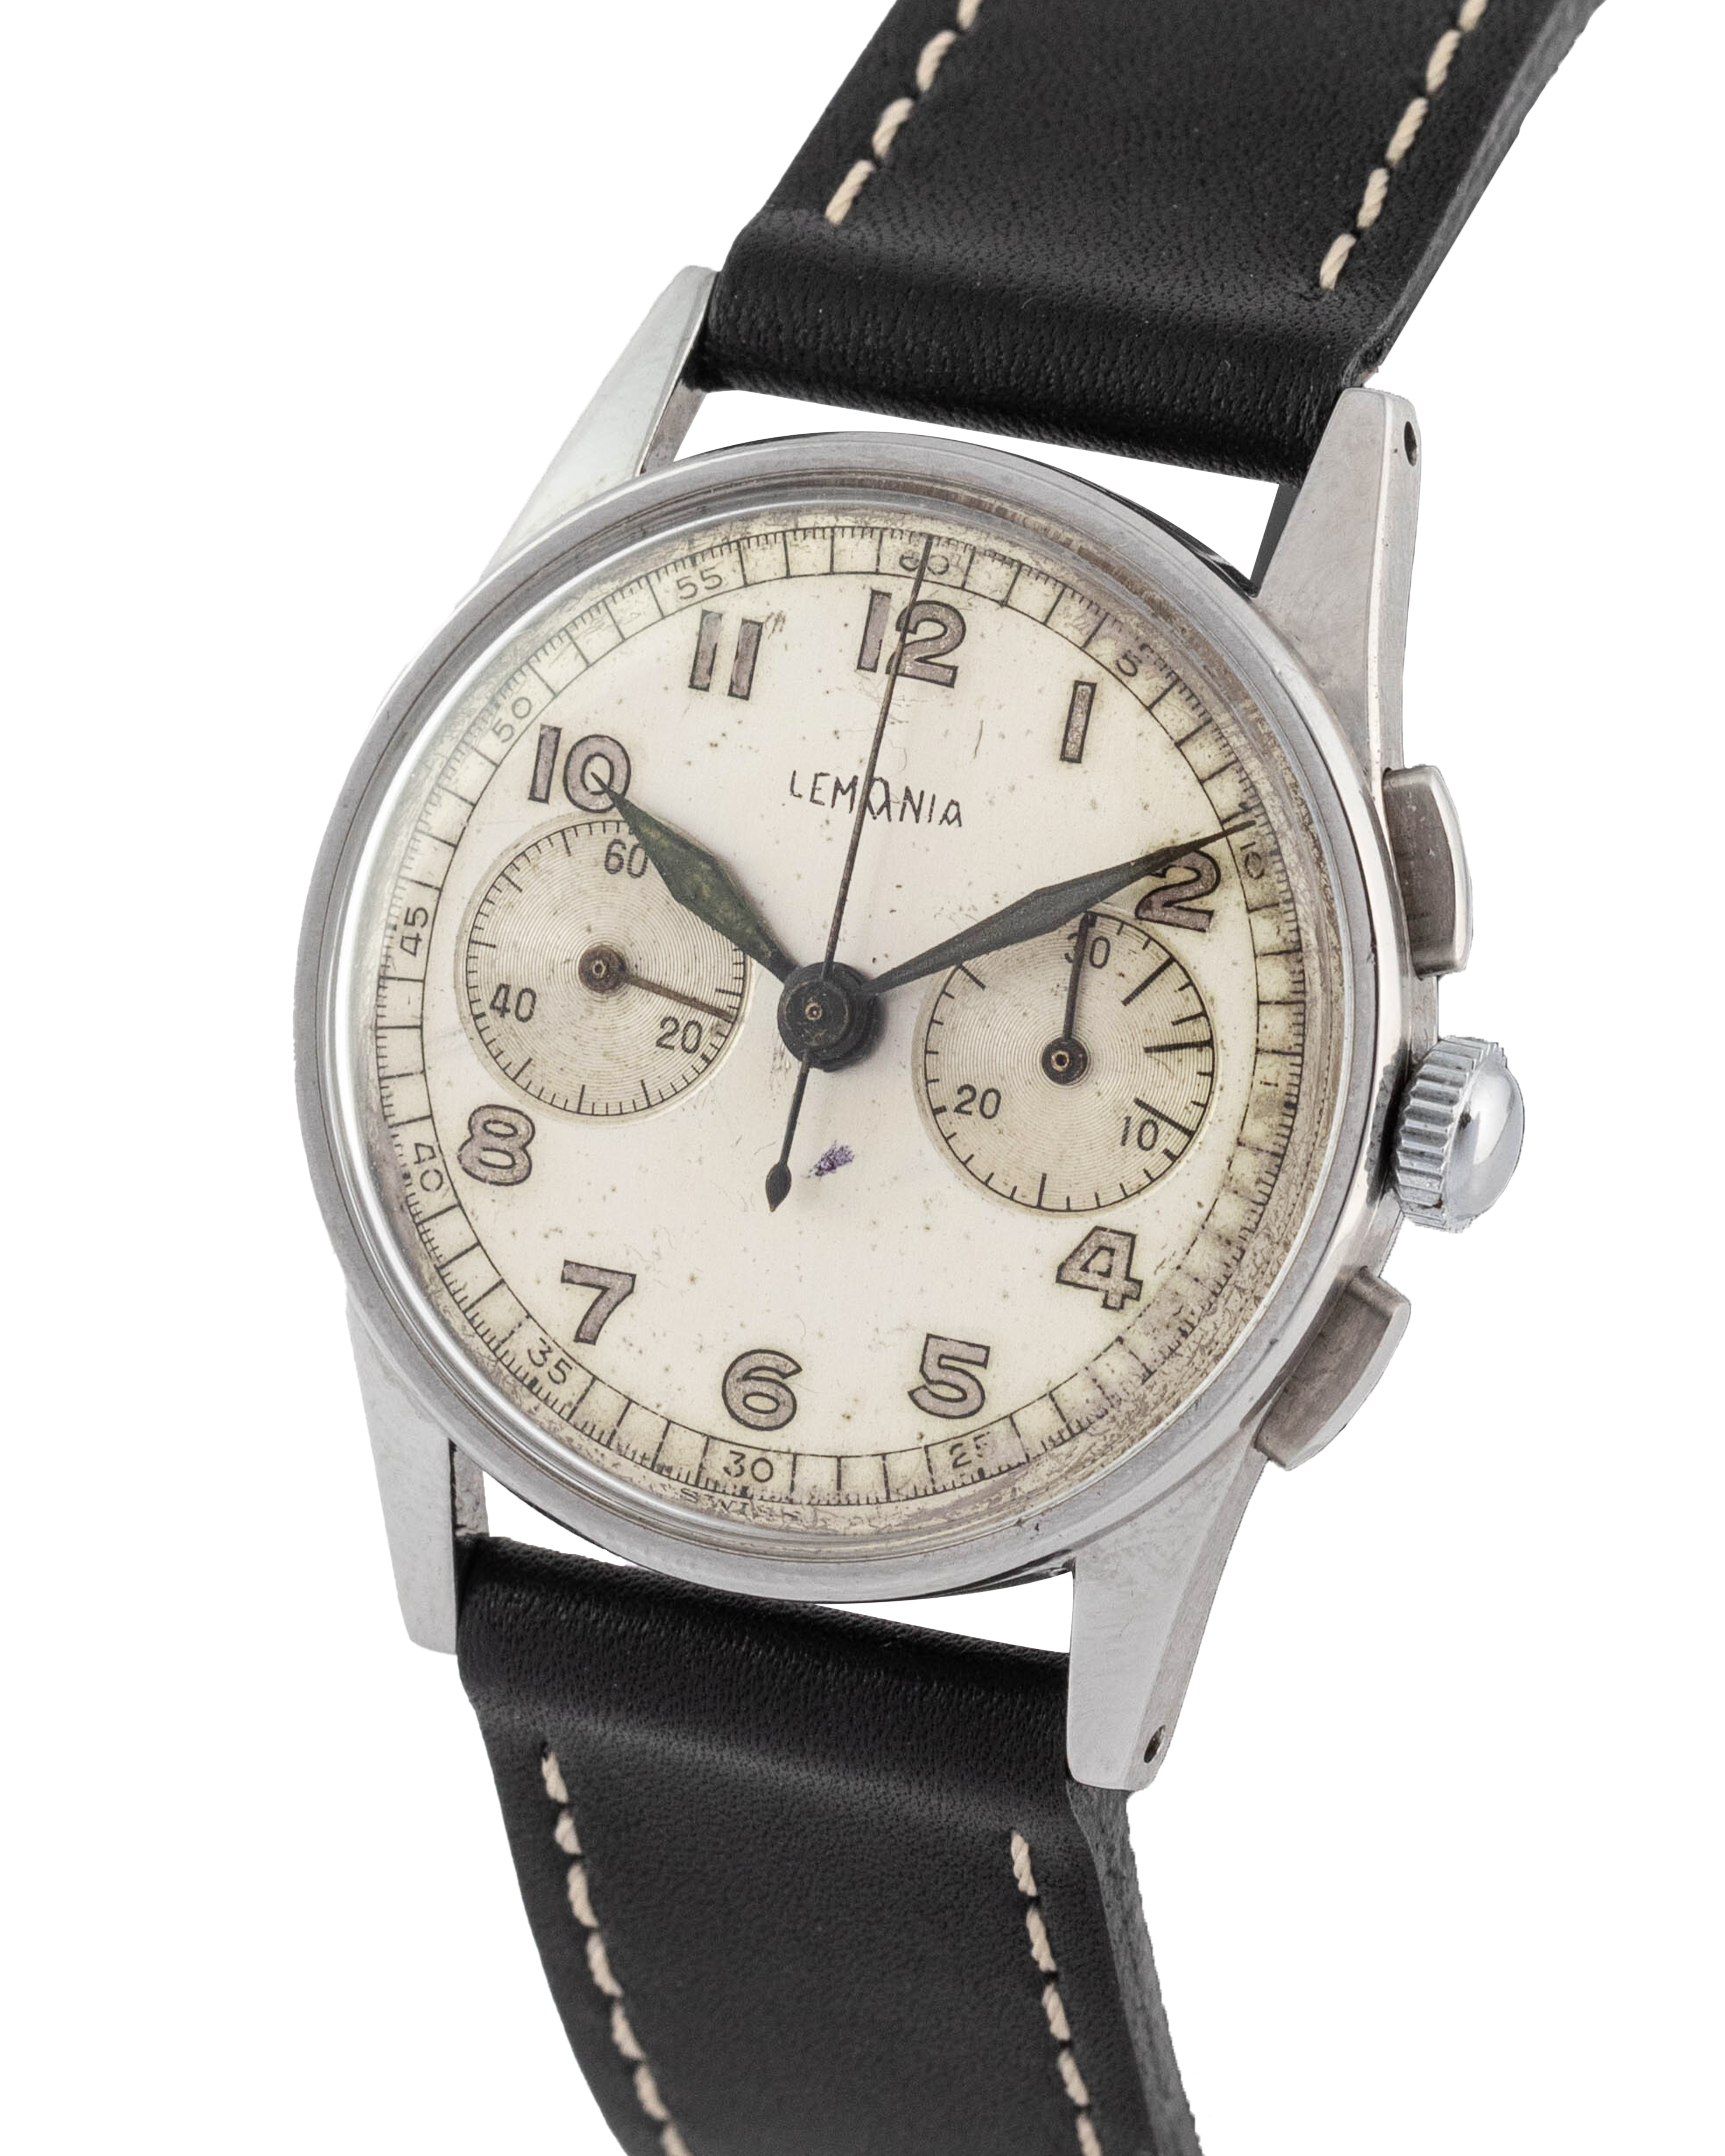 Lemania Chronograph "Radium Numbers" wrist watch 